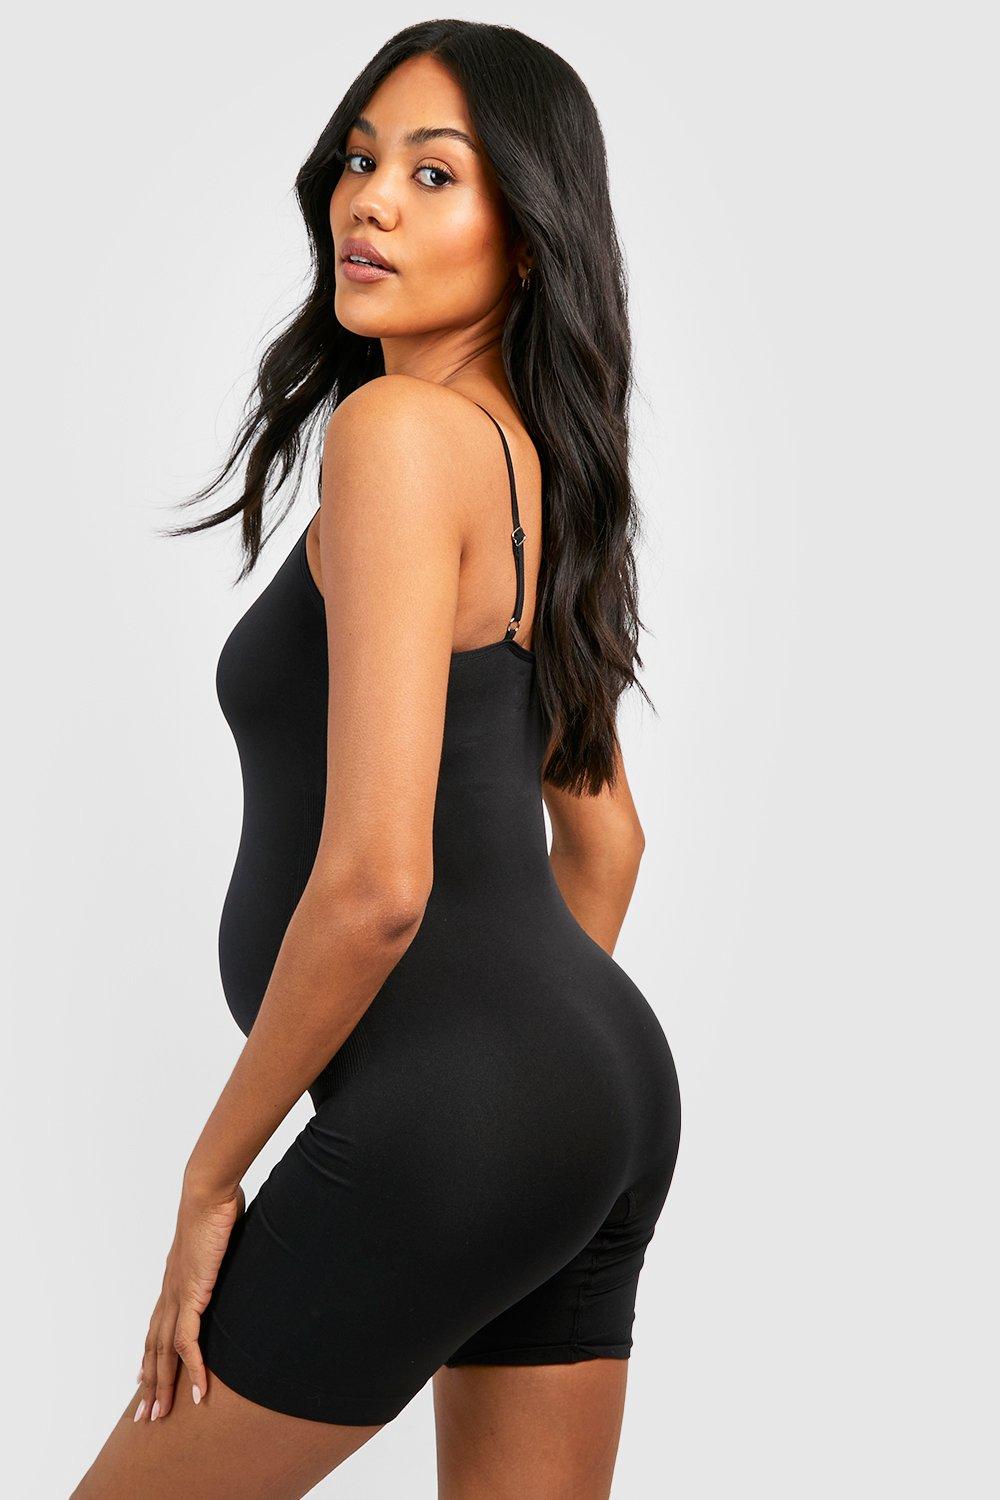 https://media.boohoo.com/i/boohoo/gzz40107_black_xl_1/female-black-maternity-bump-support-shapewear-unitard